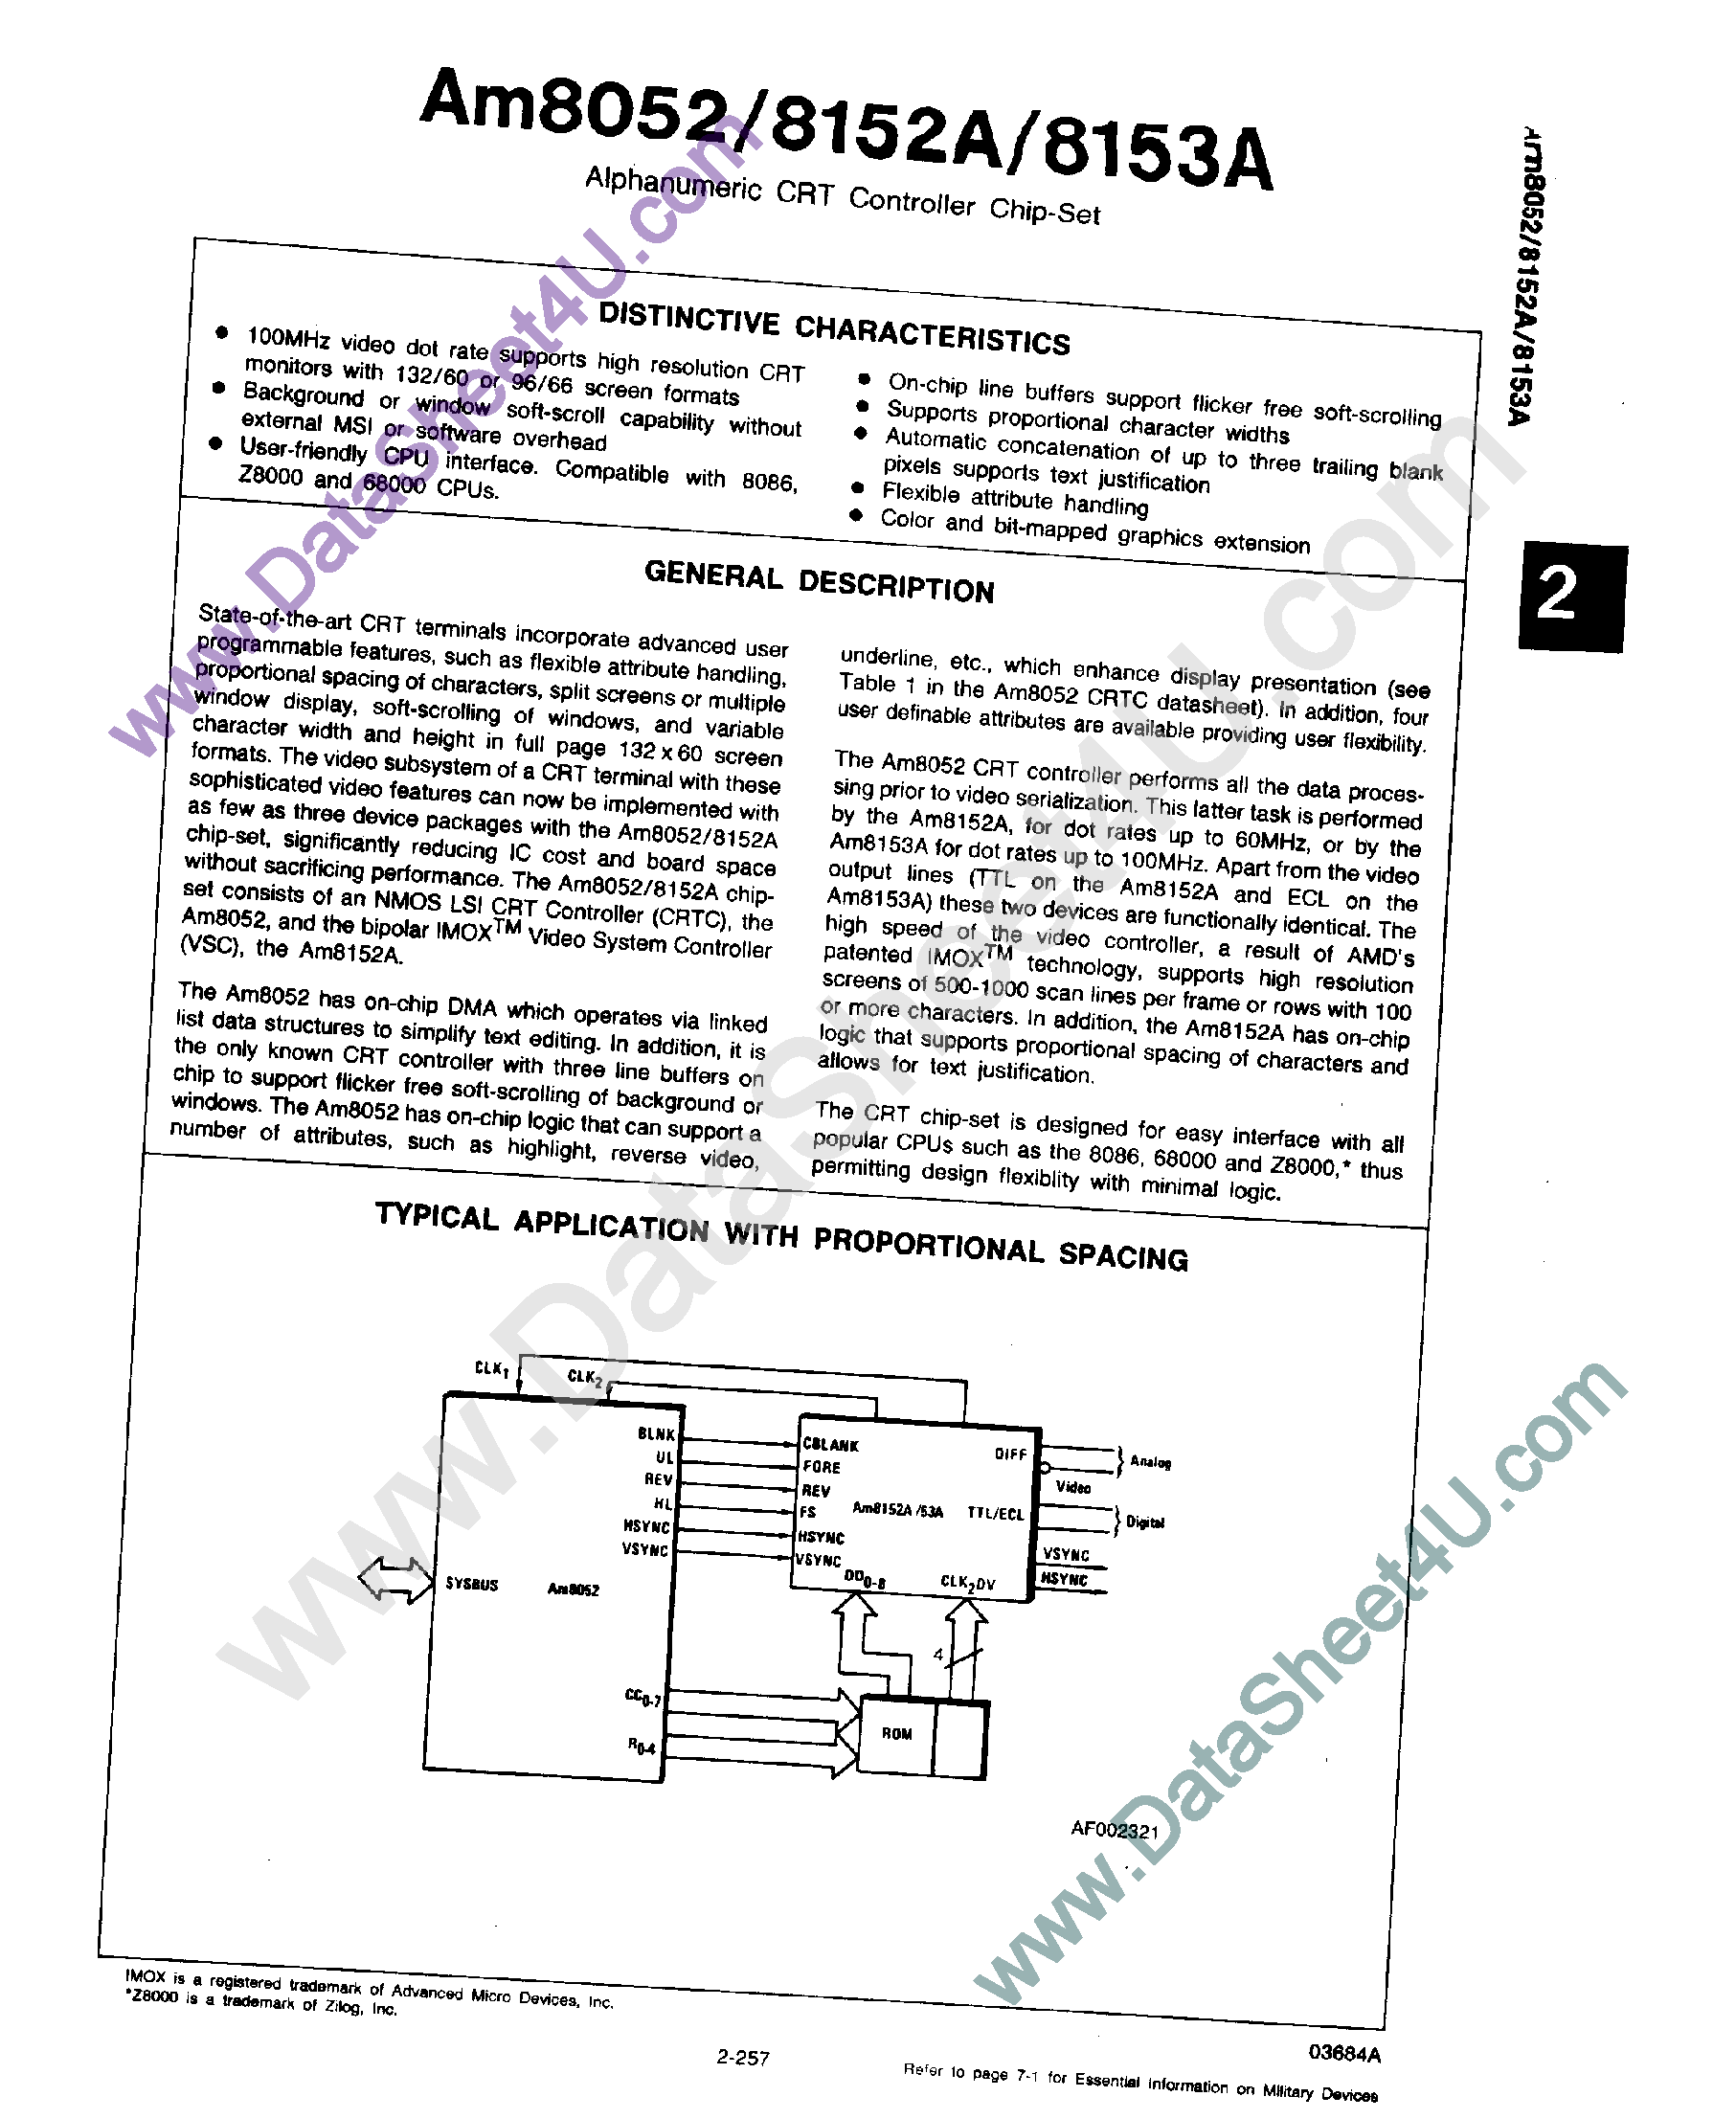 Datasheet AM8052 - (AM8152 / AM8153) Alphanumeric CRT Controller Chip-Set page 1